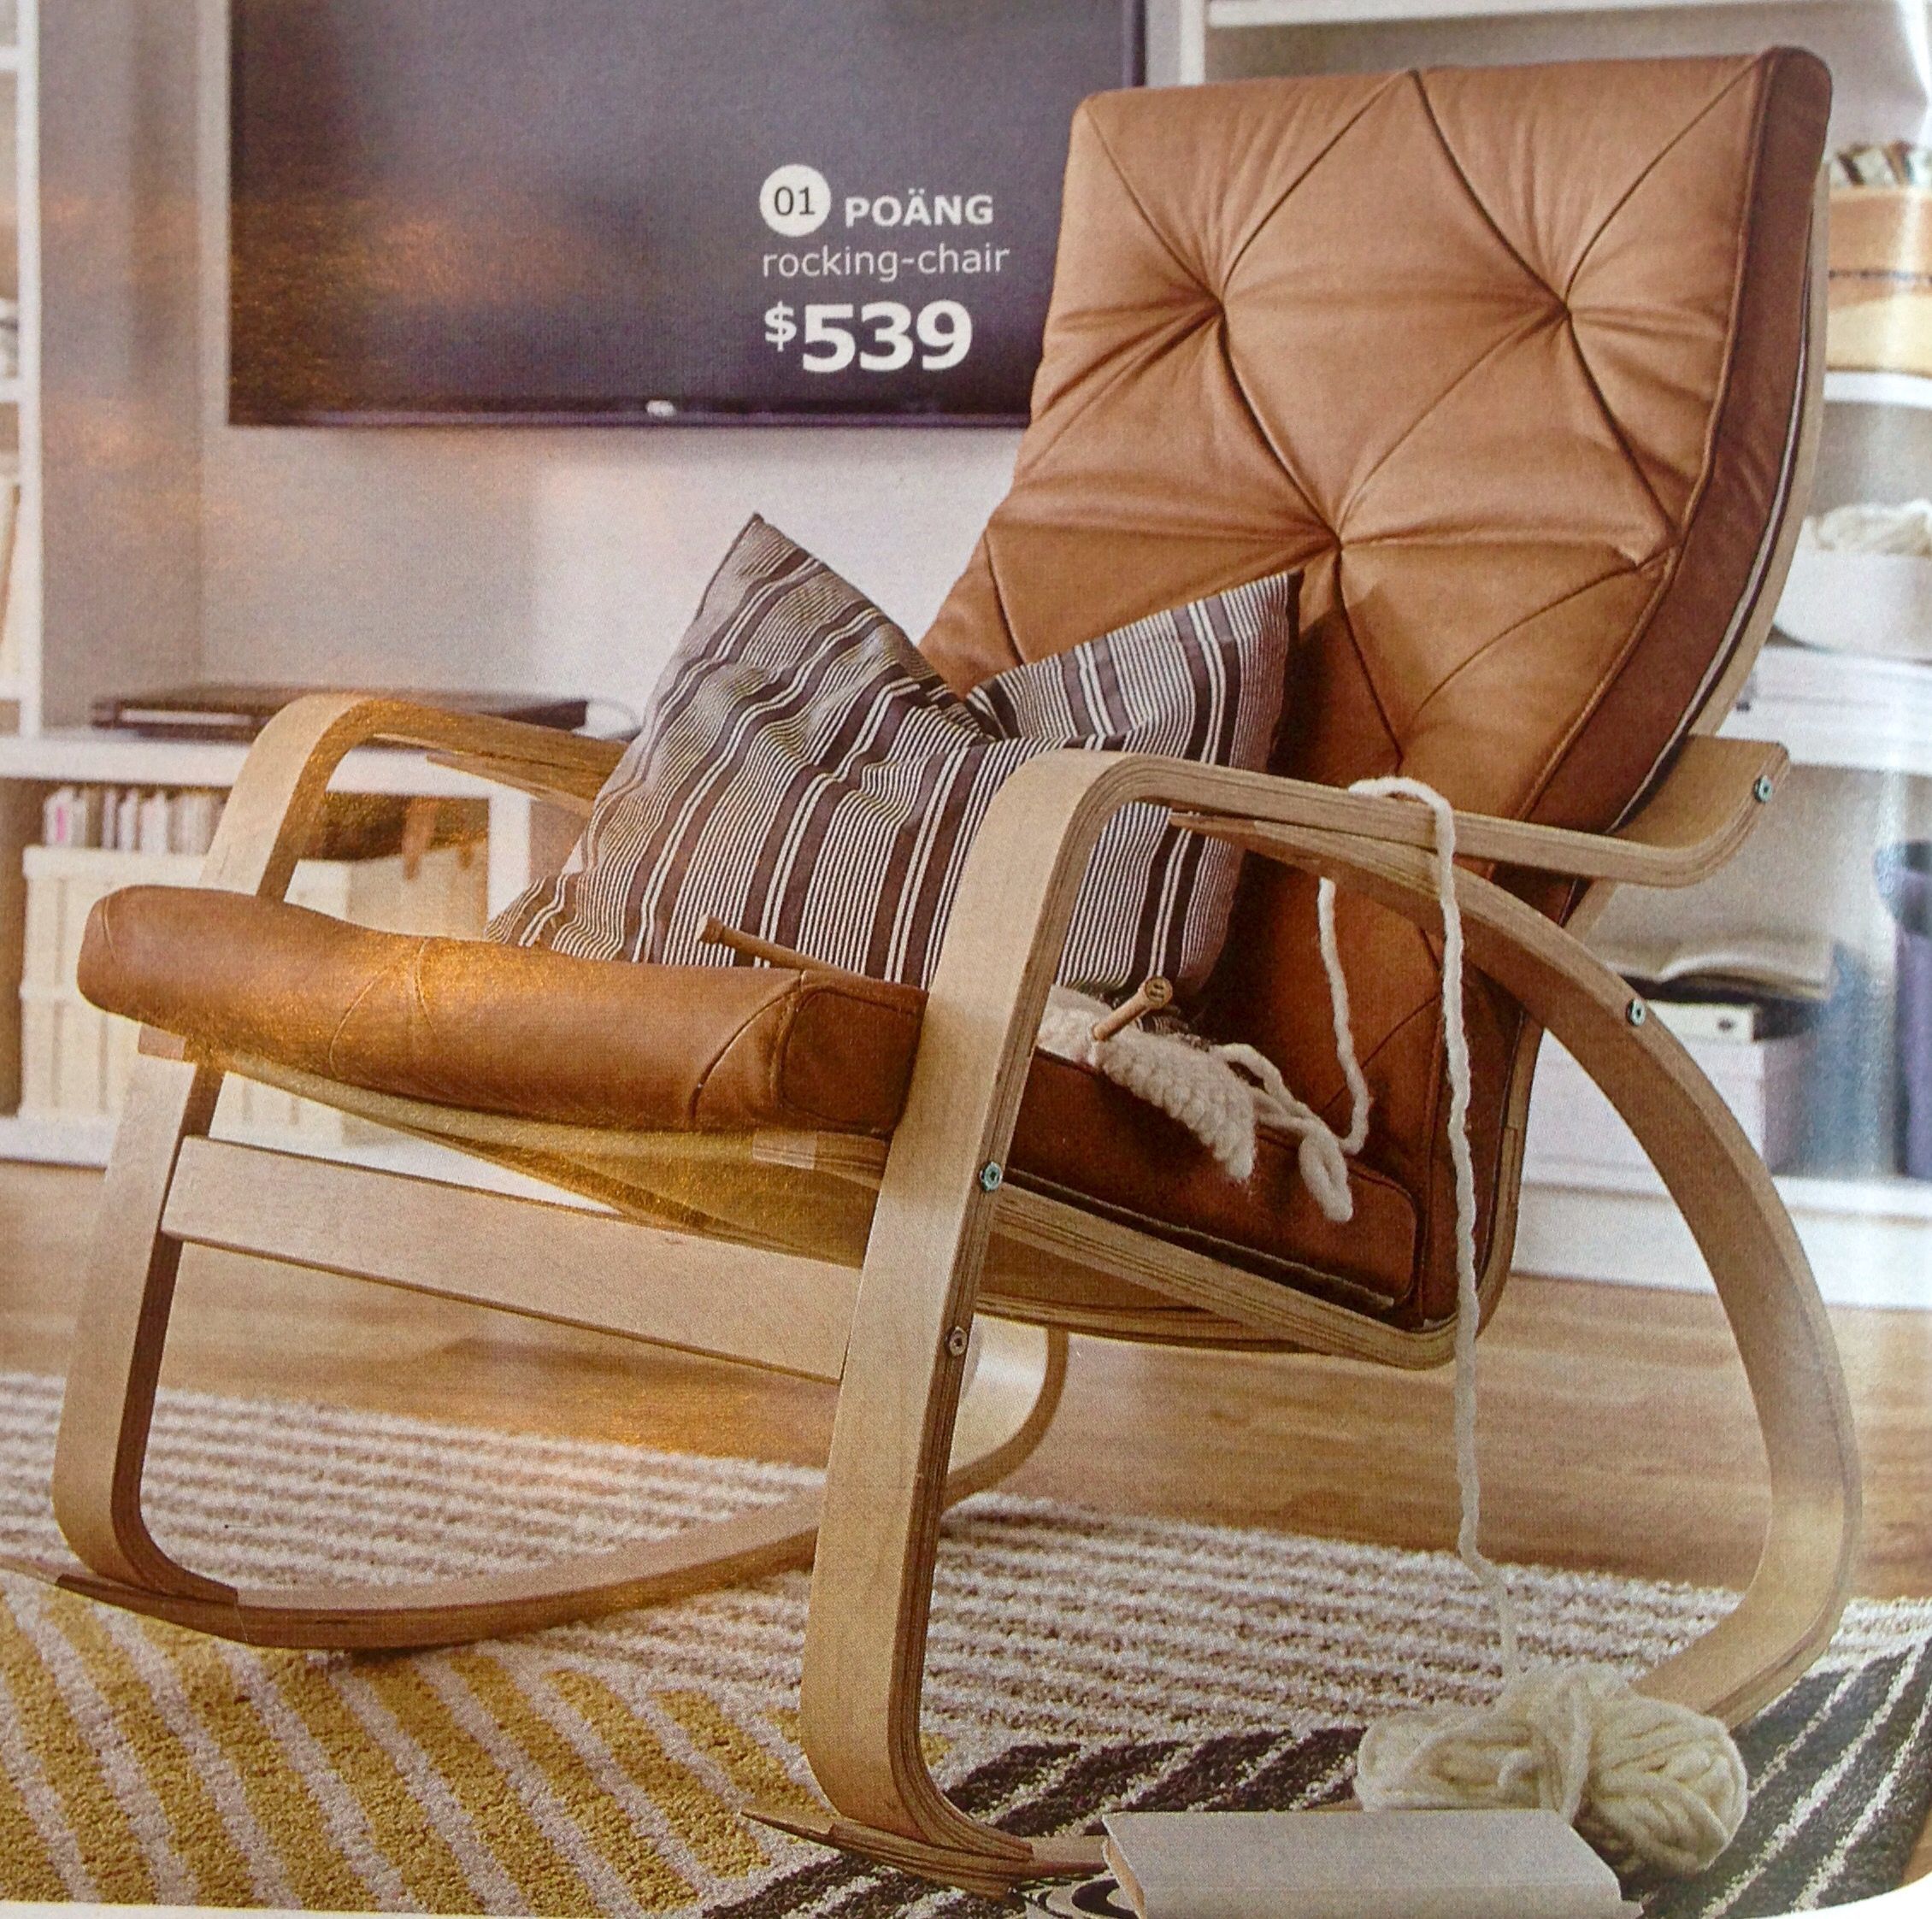 IKEA Poang rocking chair, seglora natural leather cover, birch veneer